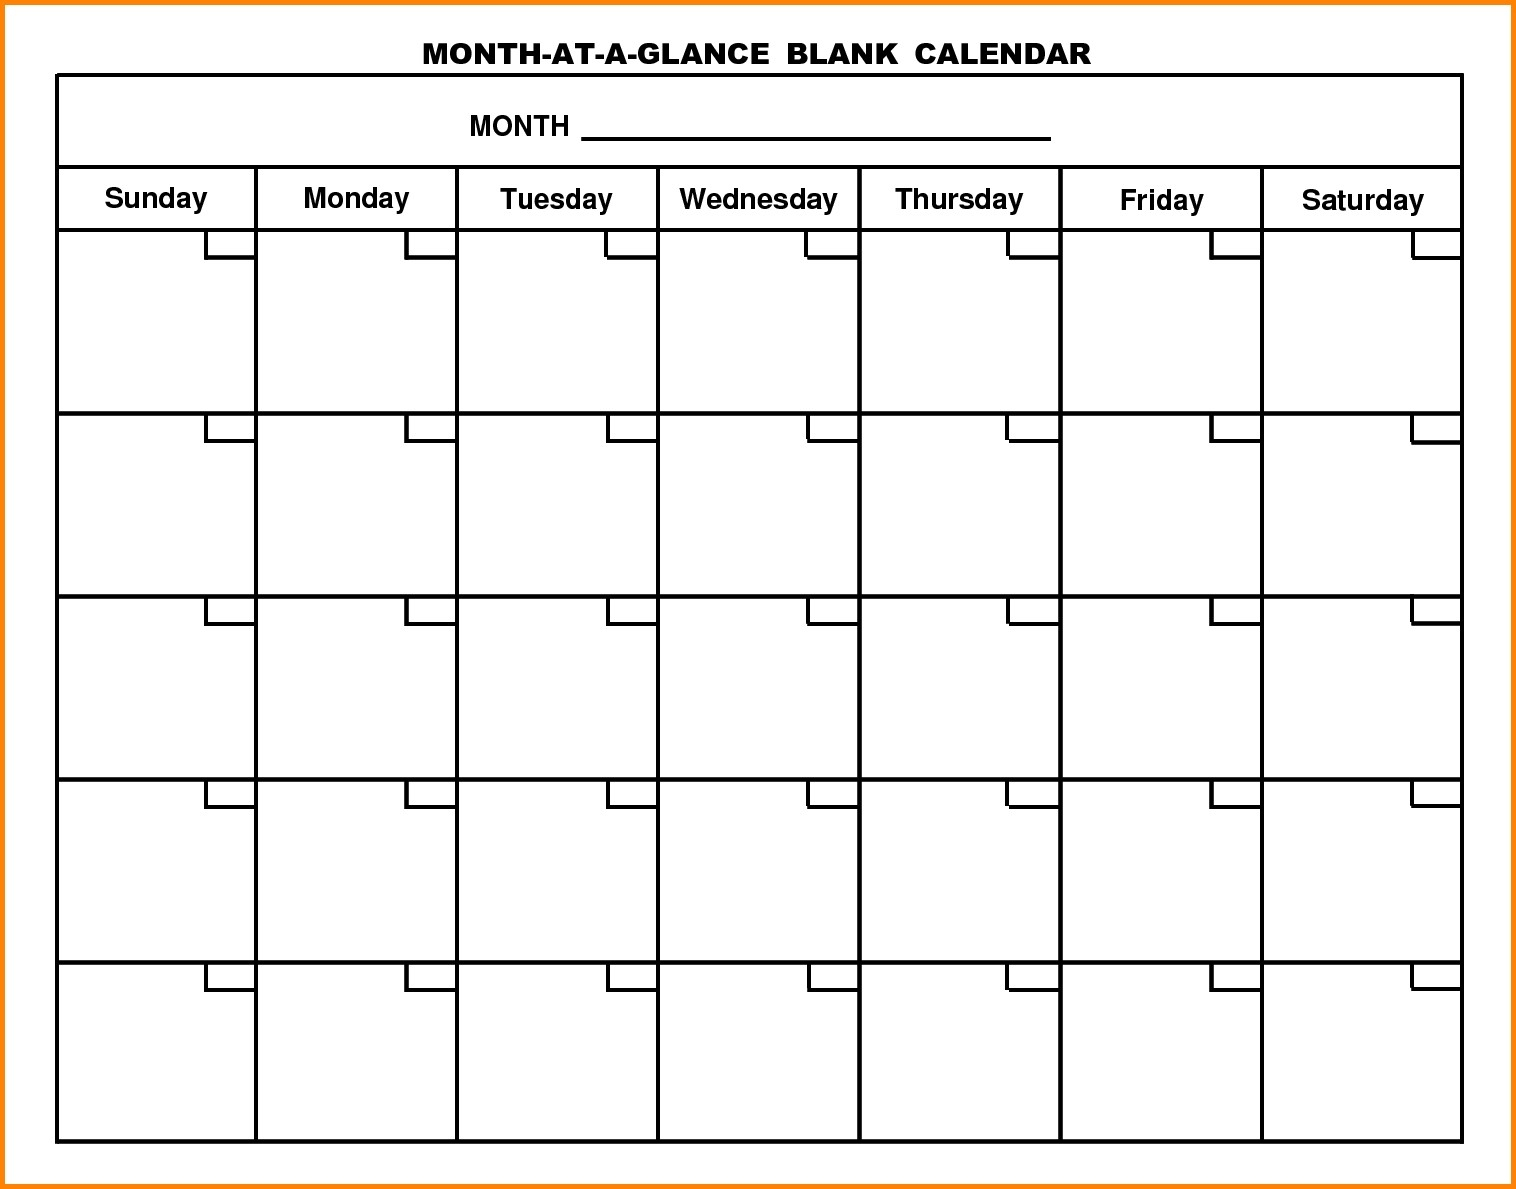 Month At A Glance Blank Calendar Printable | Monthly With Month At A Glance Blank Calendar Template